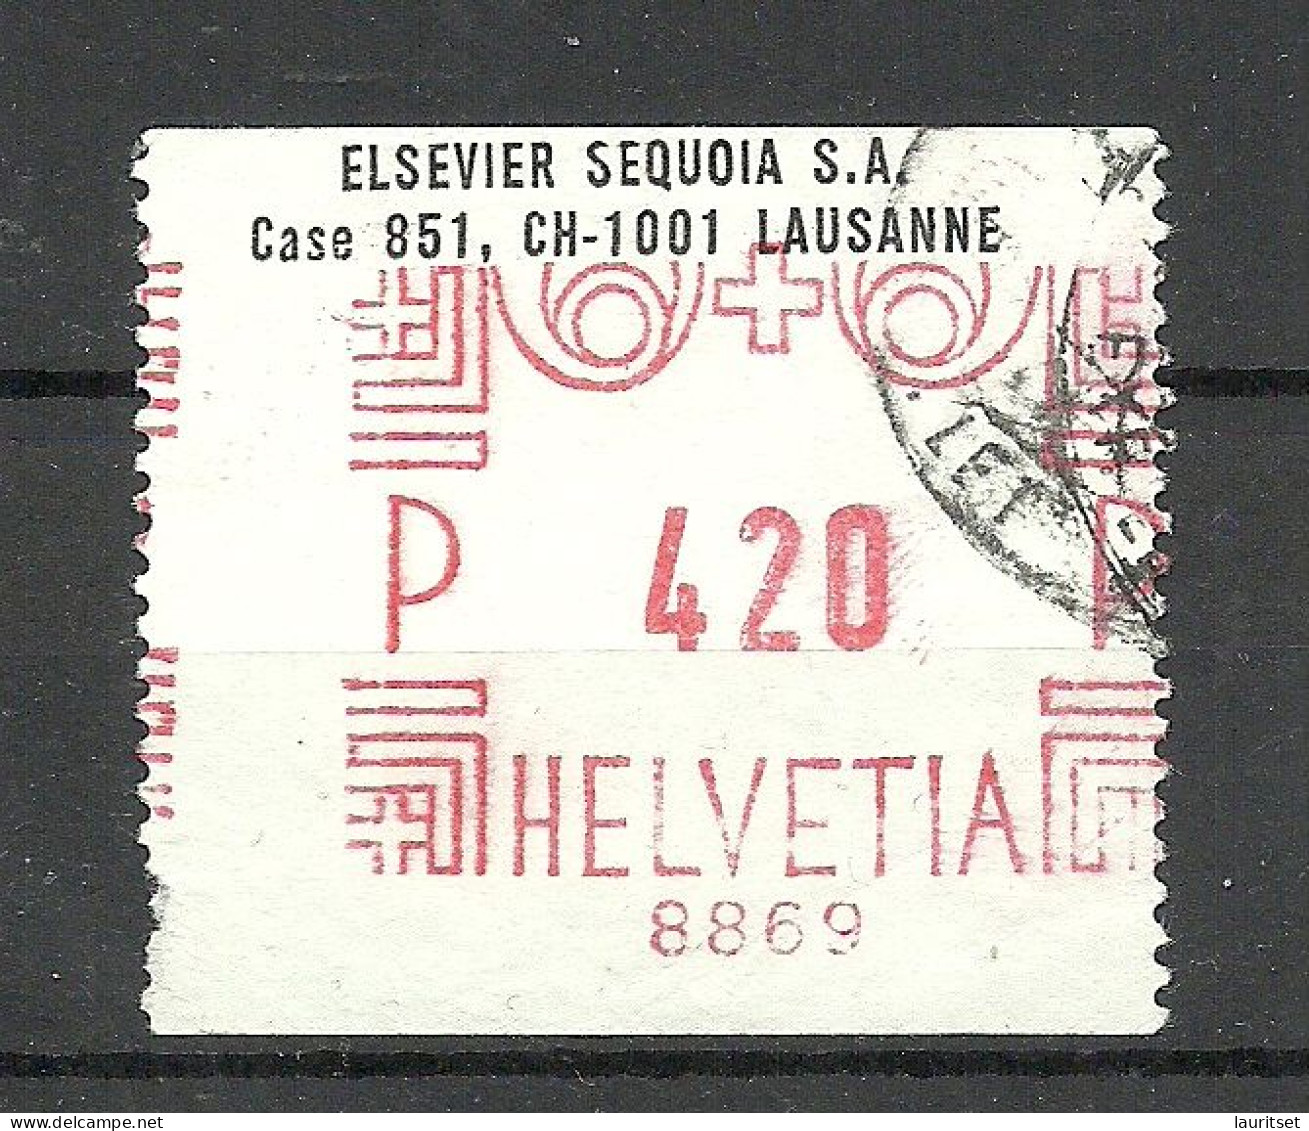 SCHWEIZ Switzerland - Automatenmarke O 1975 LAUSANNE Elsevier Sequoia S.A. - Automatenmarken